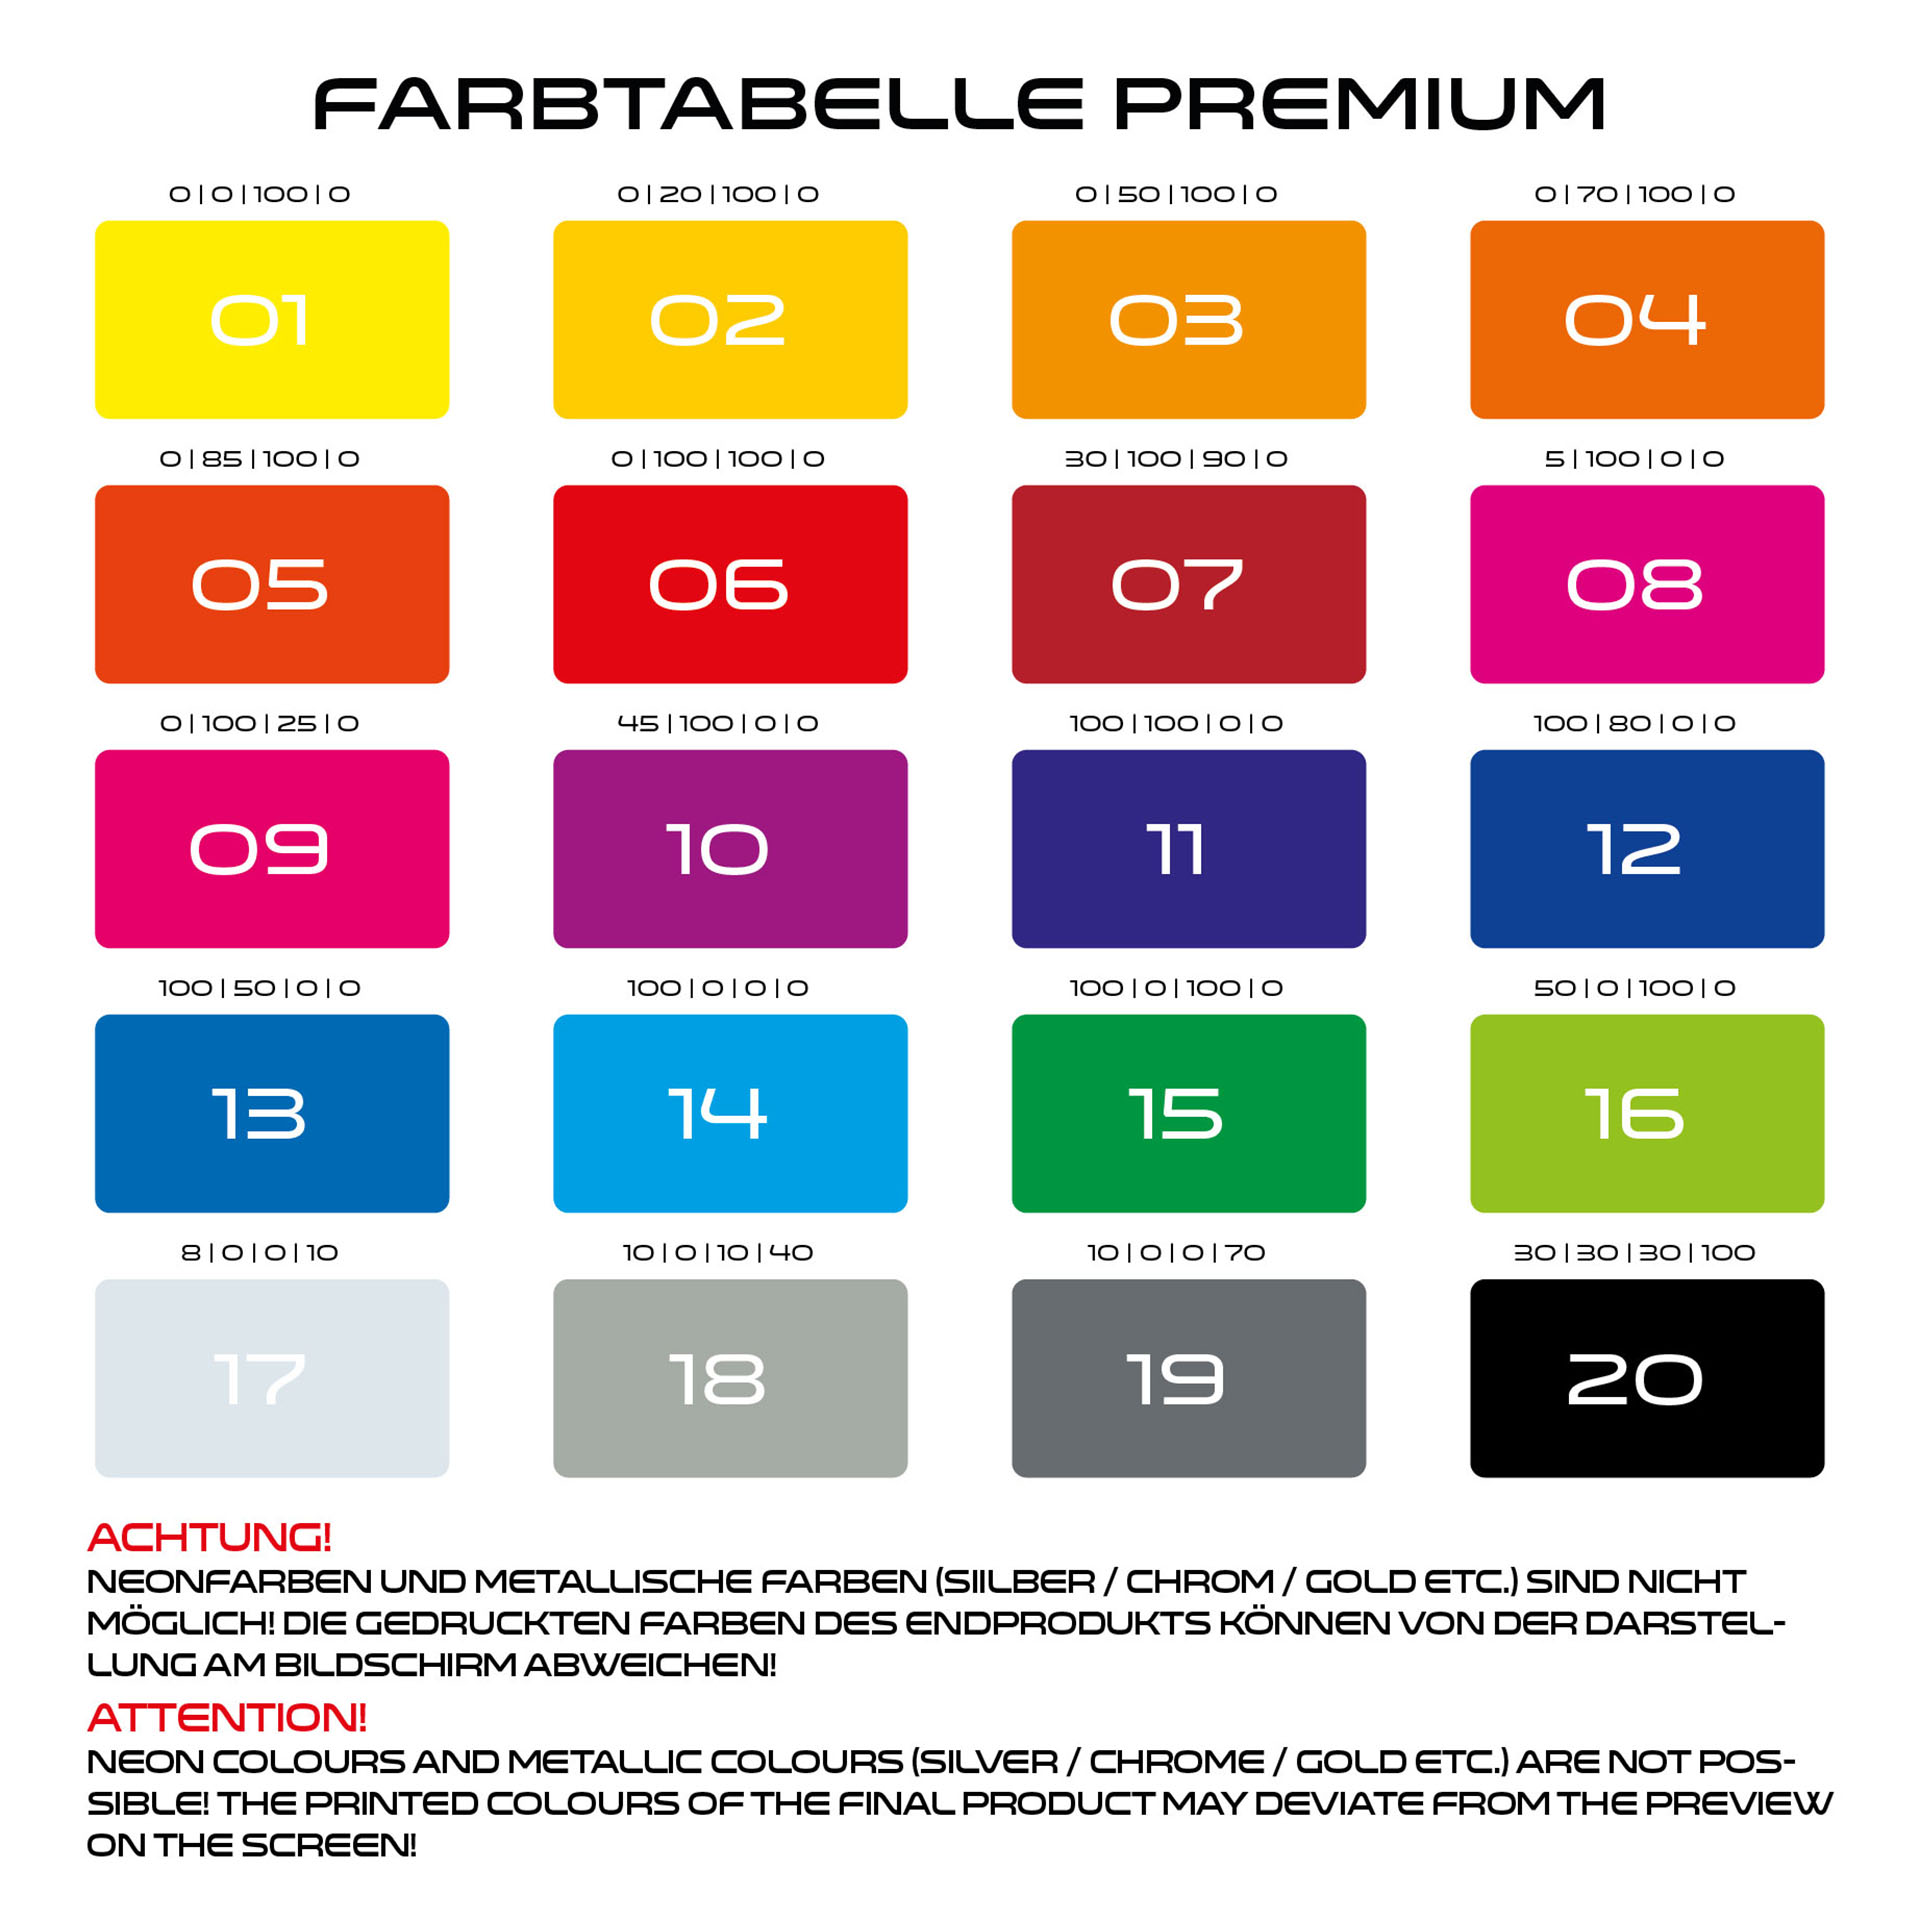 Cafe Racer Felgenaufkleber Premium Design Hexagon B Farbtabelle Premium Wheelsticker